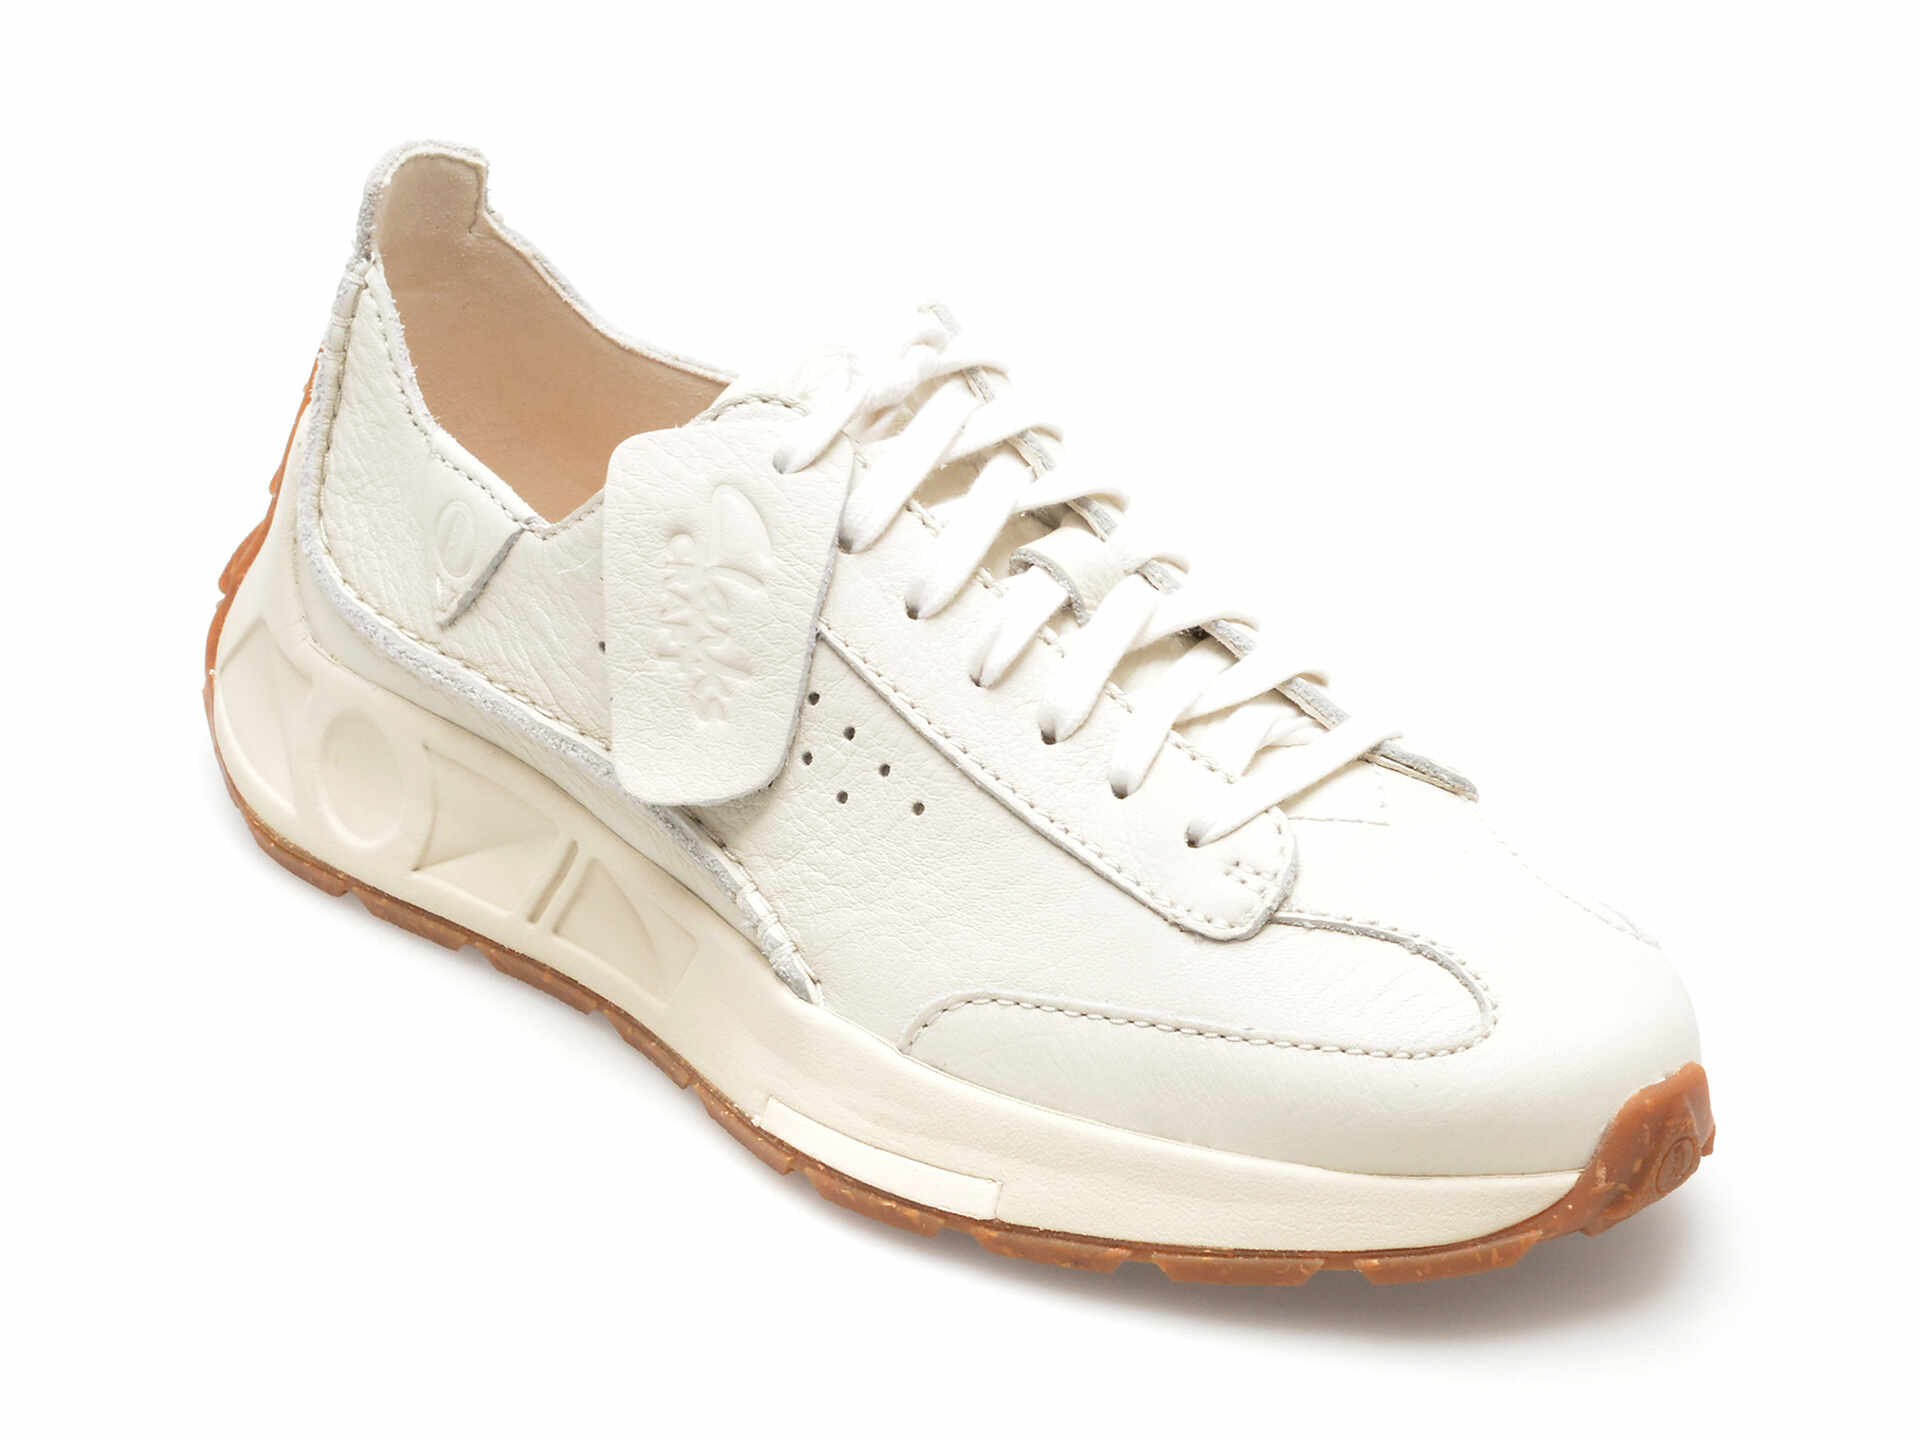 Pantofi CLARKS albi, CRAFT SPEED, din piele naturala